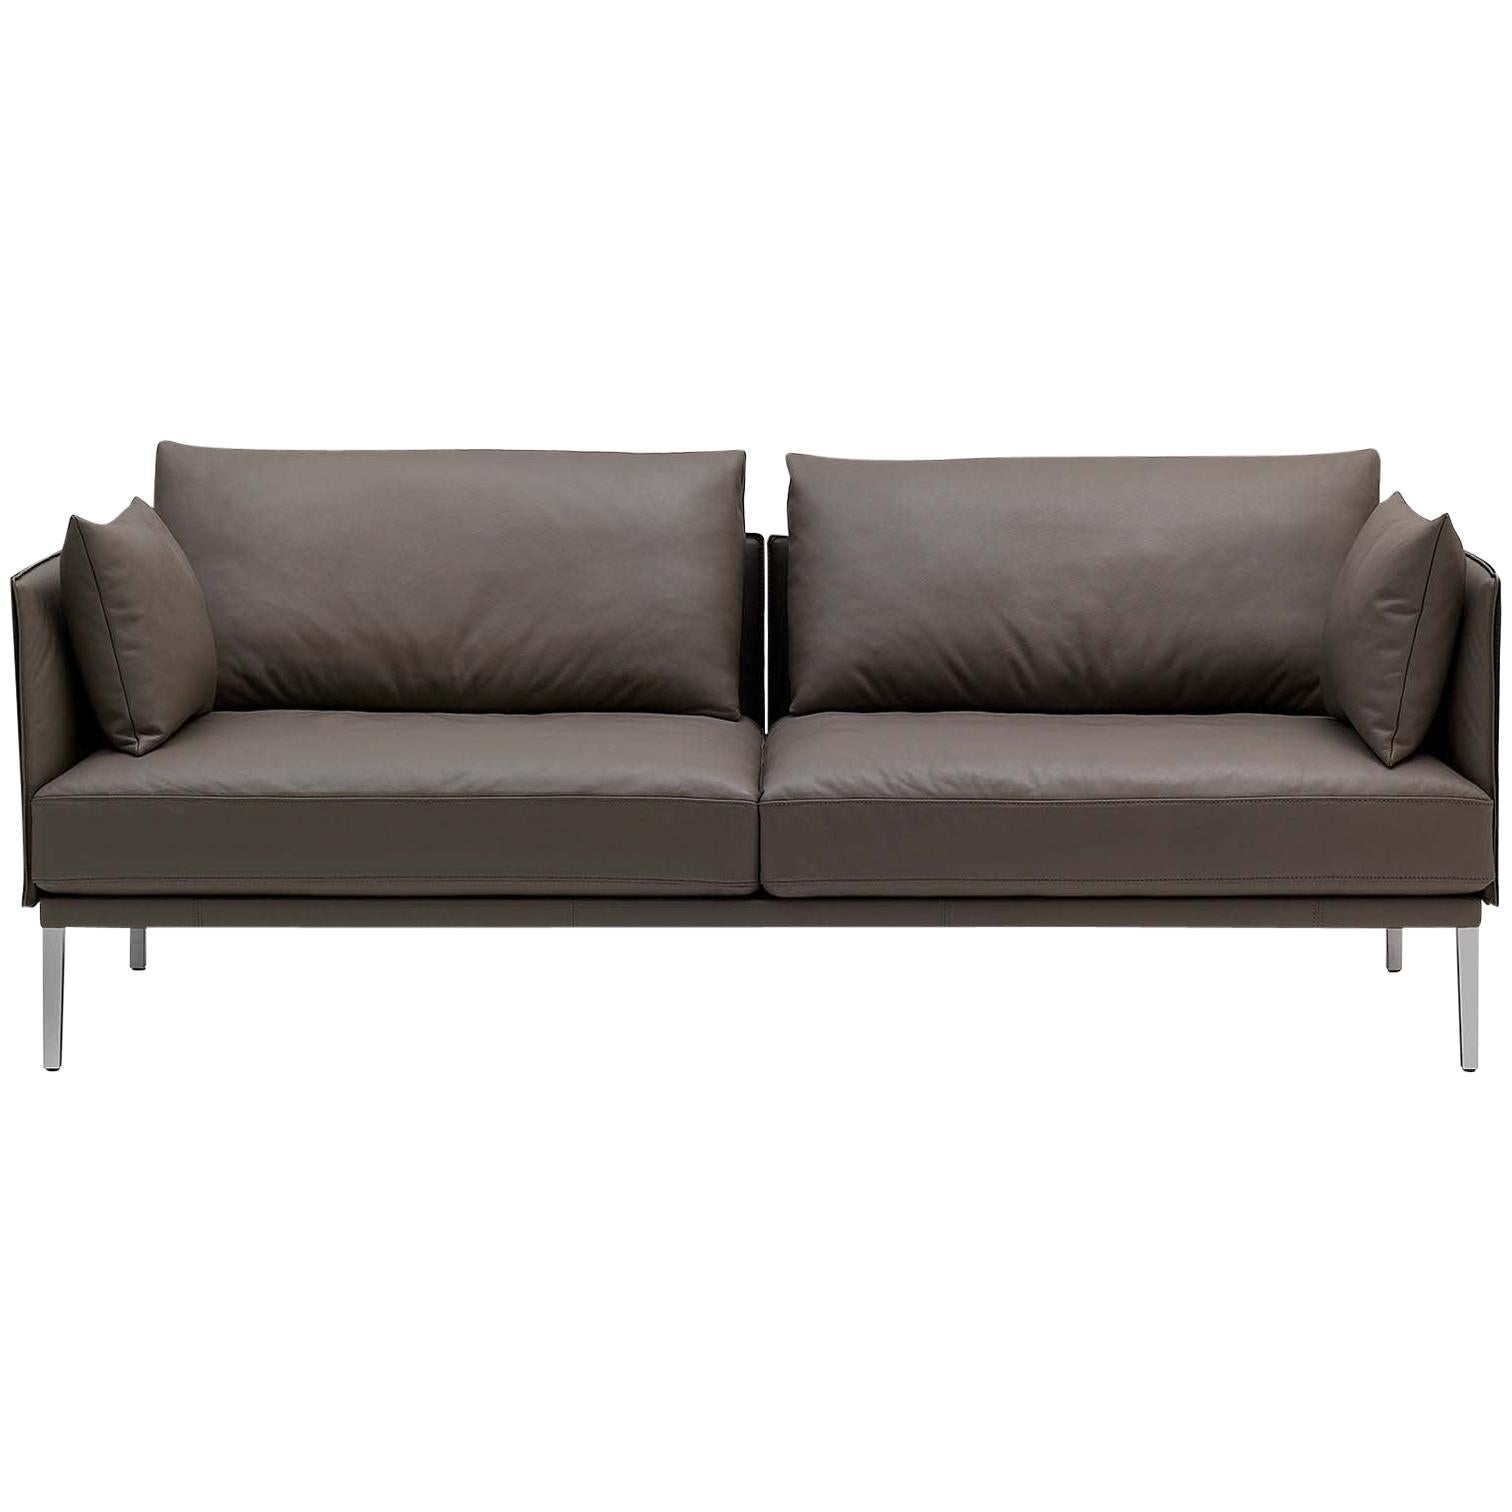 De Sede DS-333, großes zweisitziges Sofa aus Schieferleder von De Sede Design Team